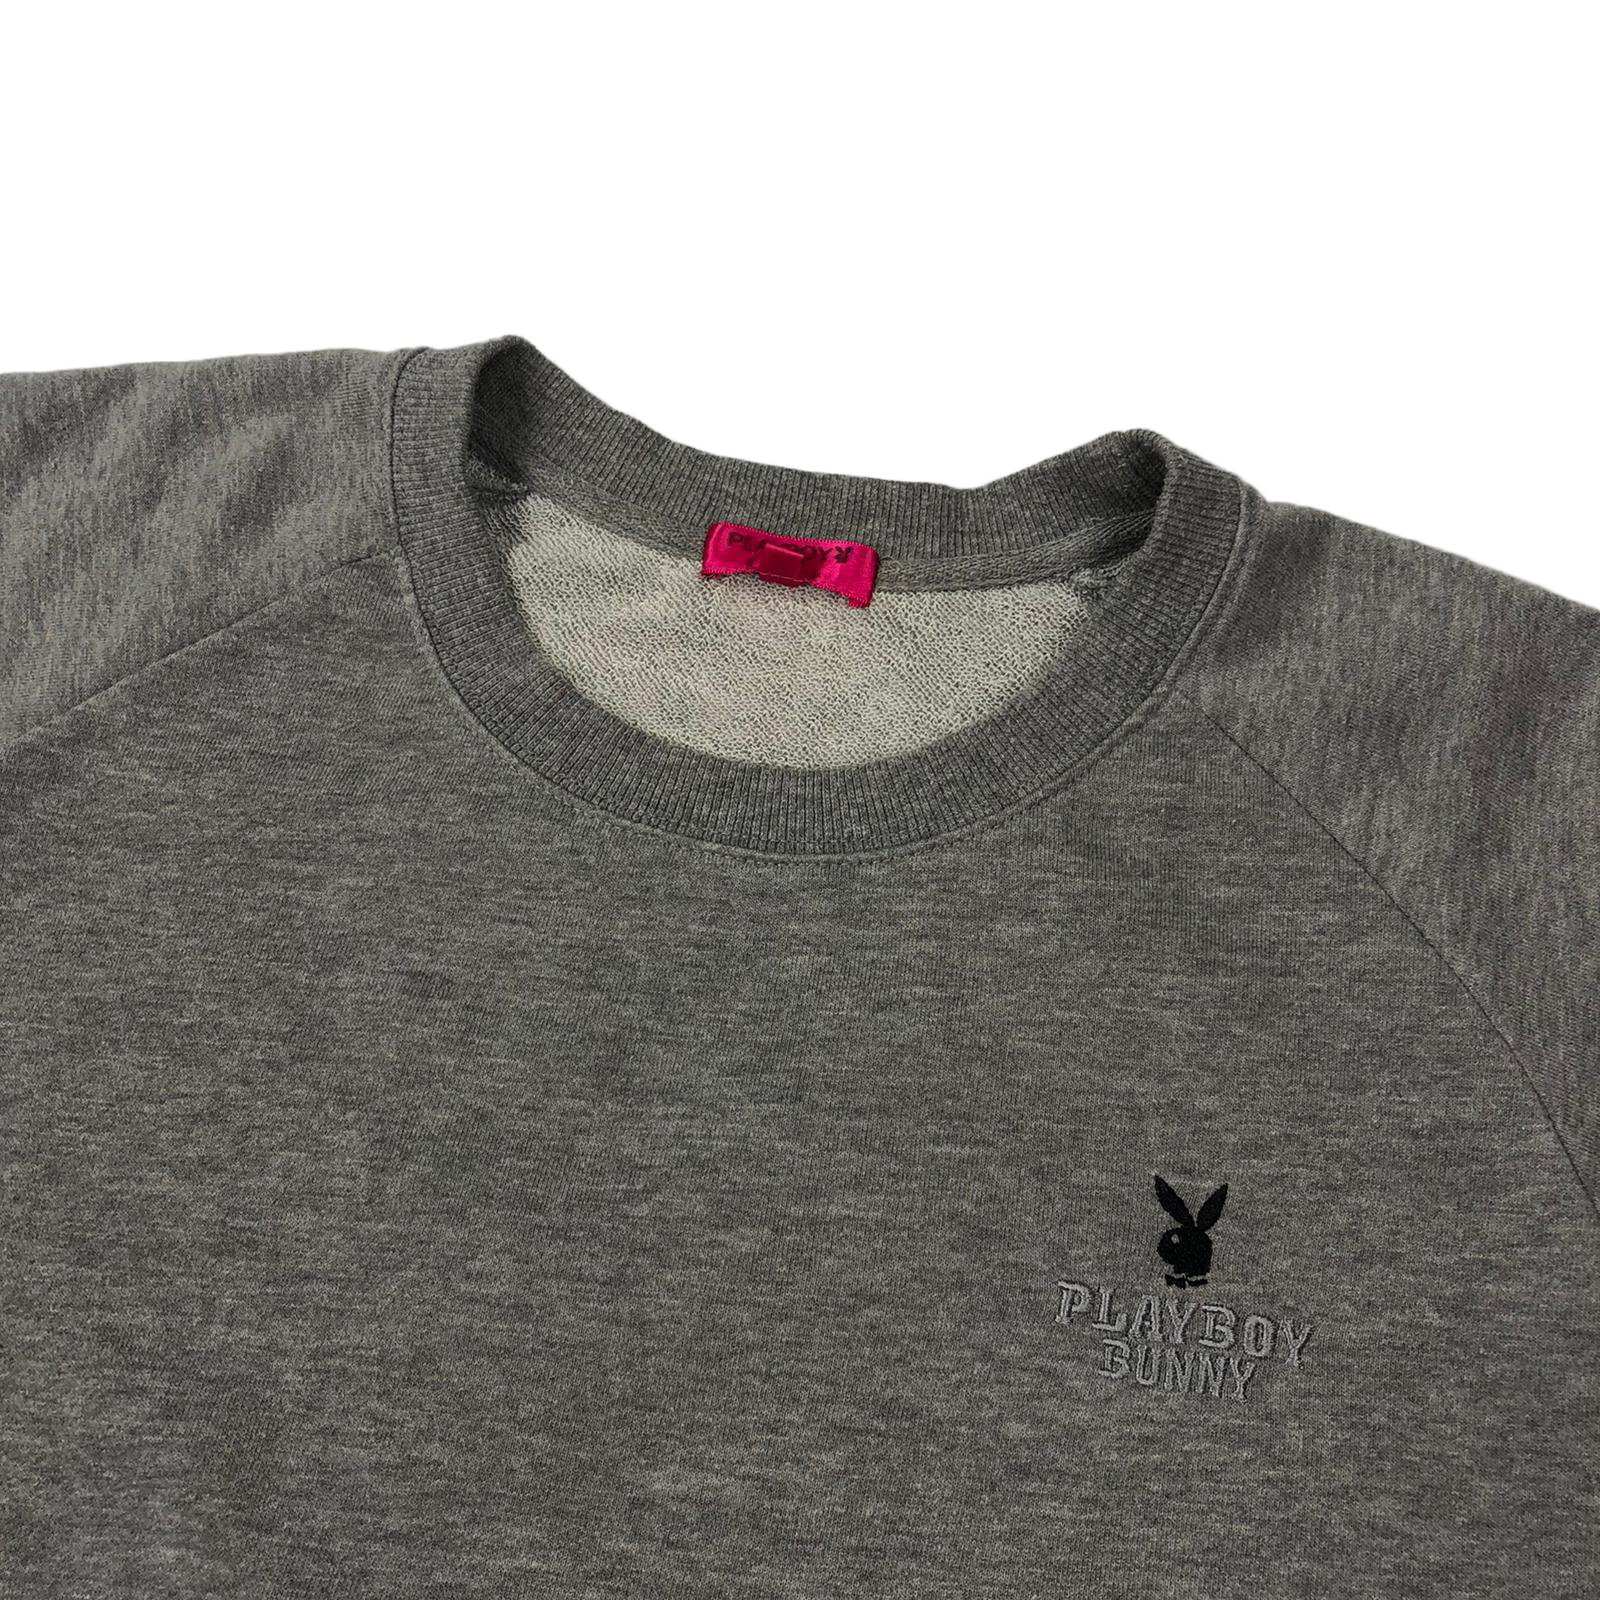 Playboy sweatshirt t-shirt